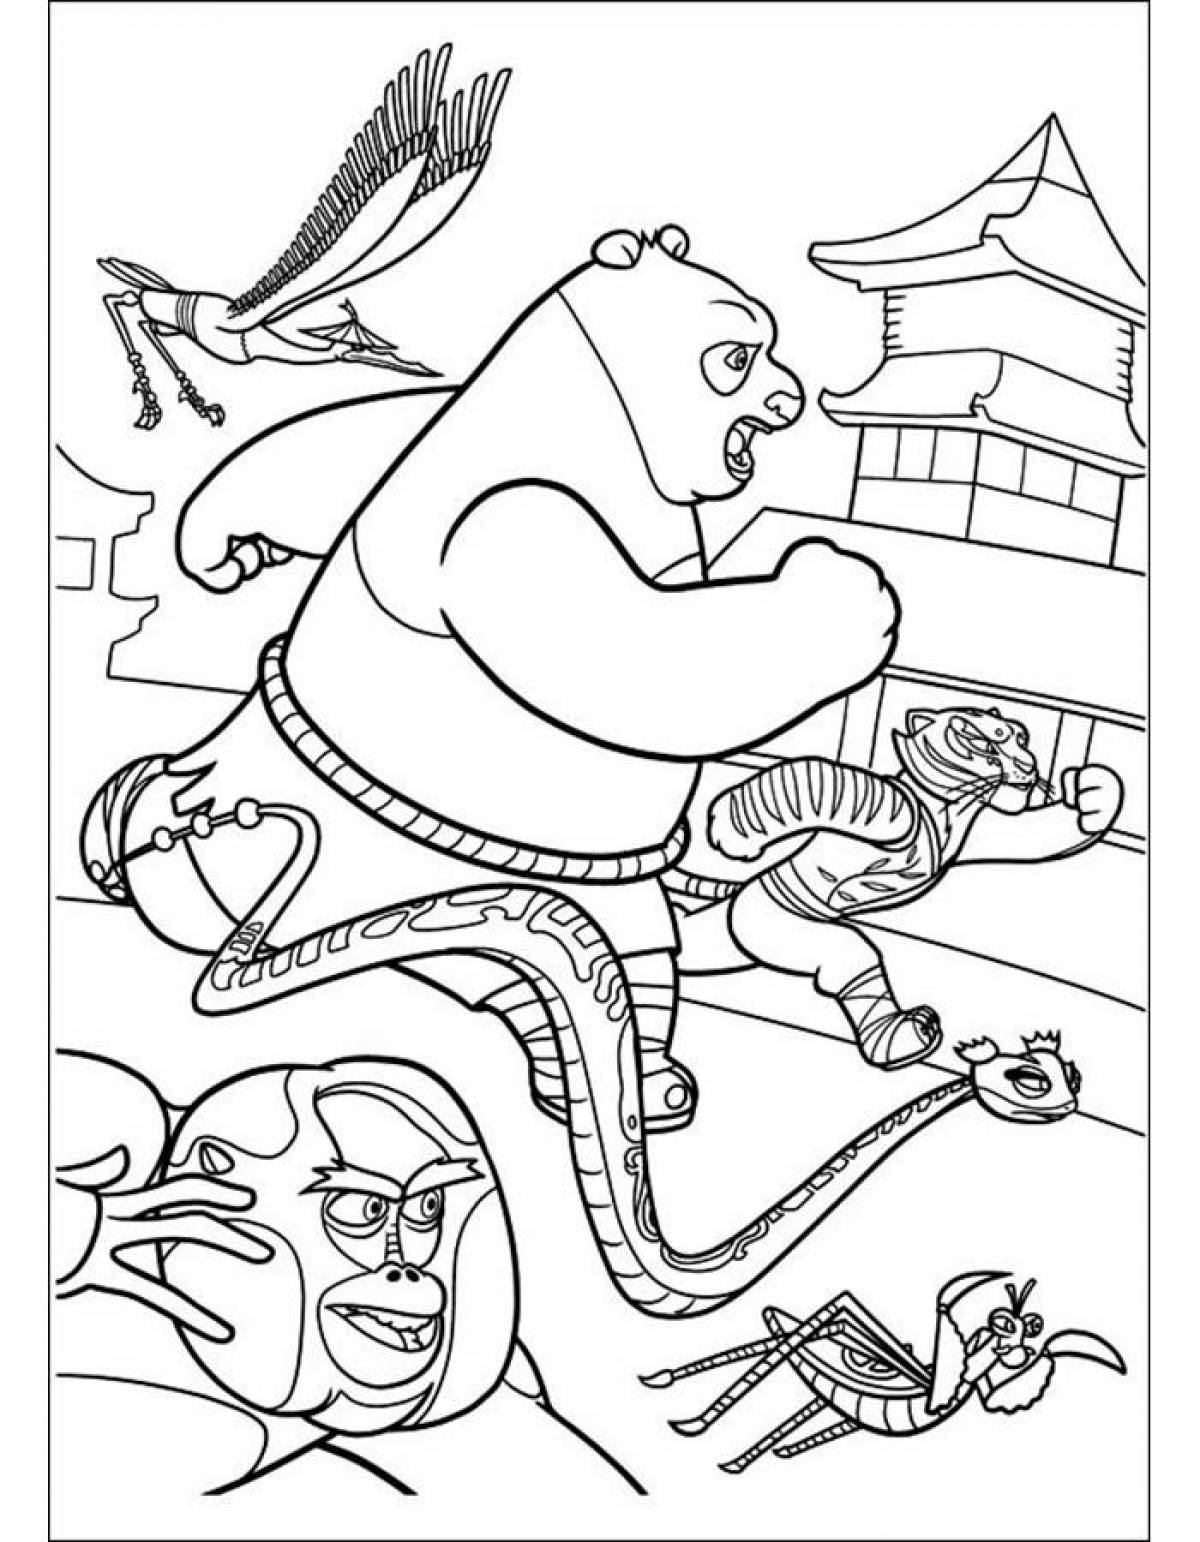 Creative kung fu panda coloring book